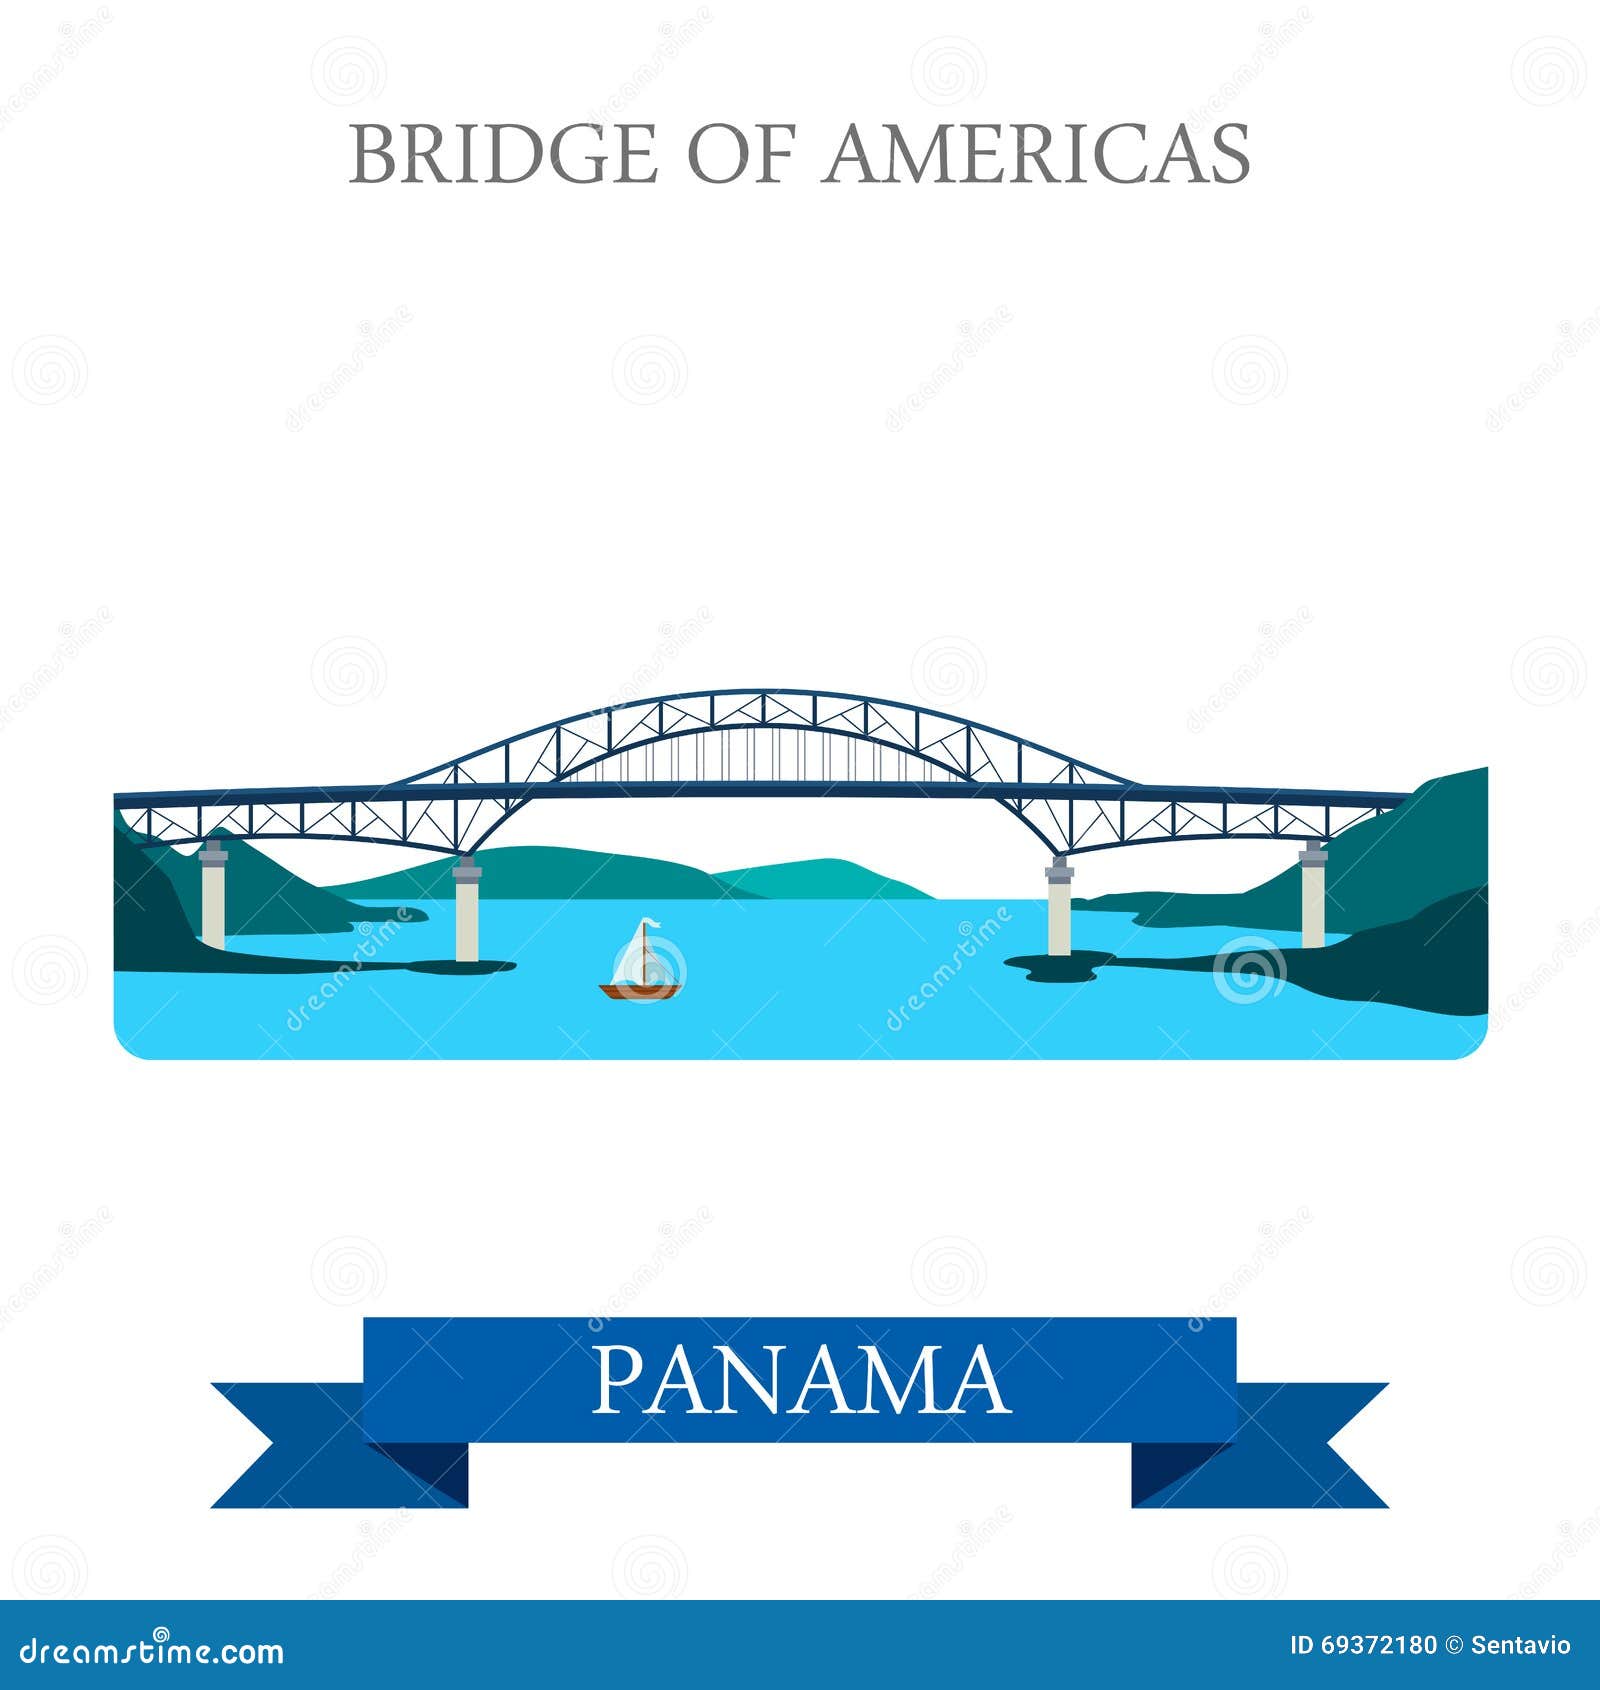 bridge of americas in panama  flat attraction landmarks